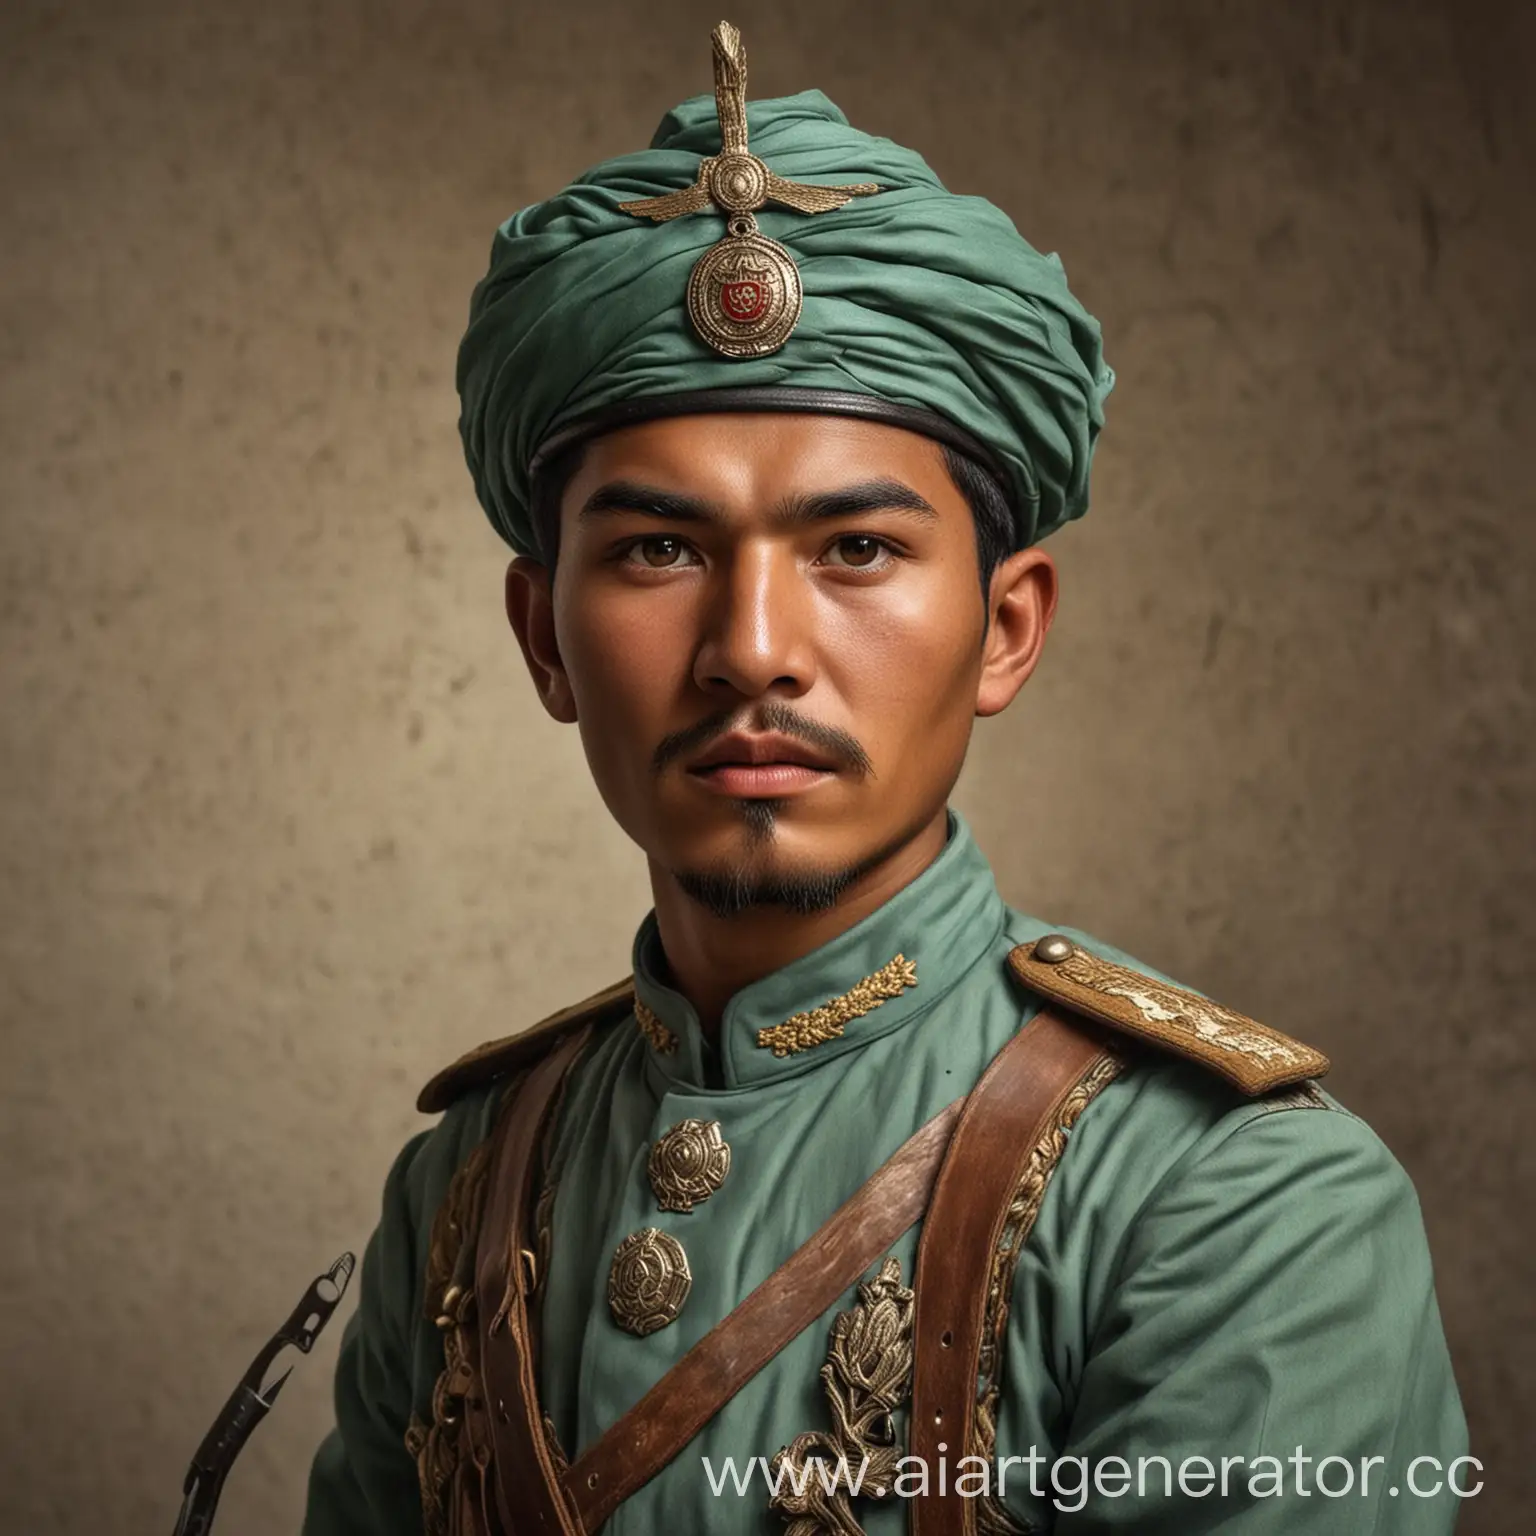 Uzbek-Soldier-in-1920-Historical-Portrait-of-a-Military-Figure